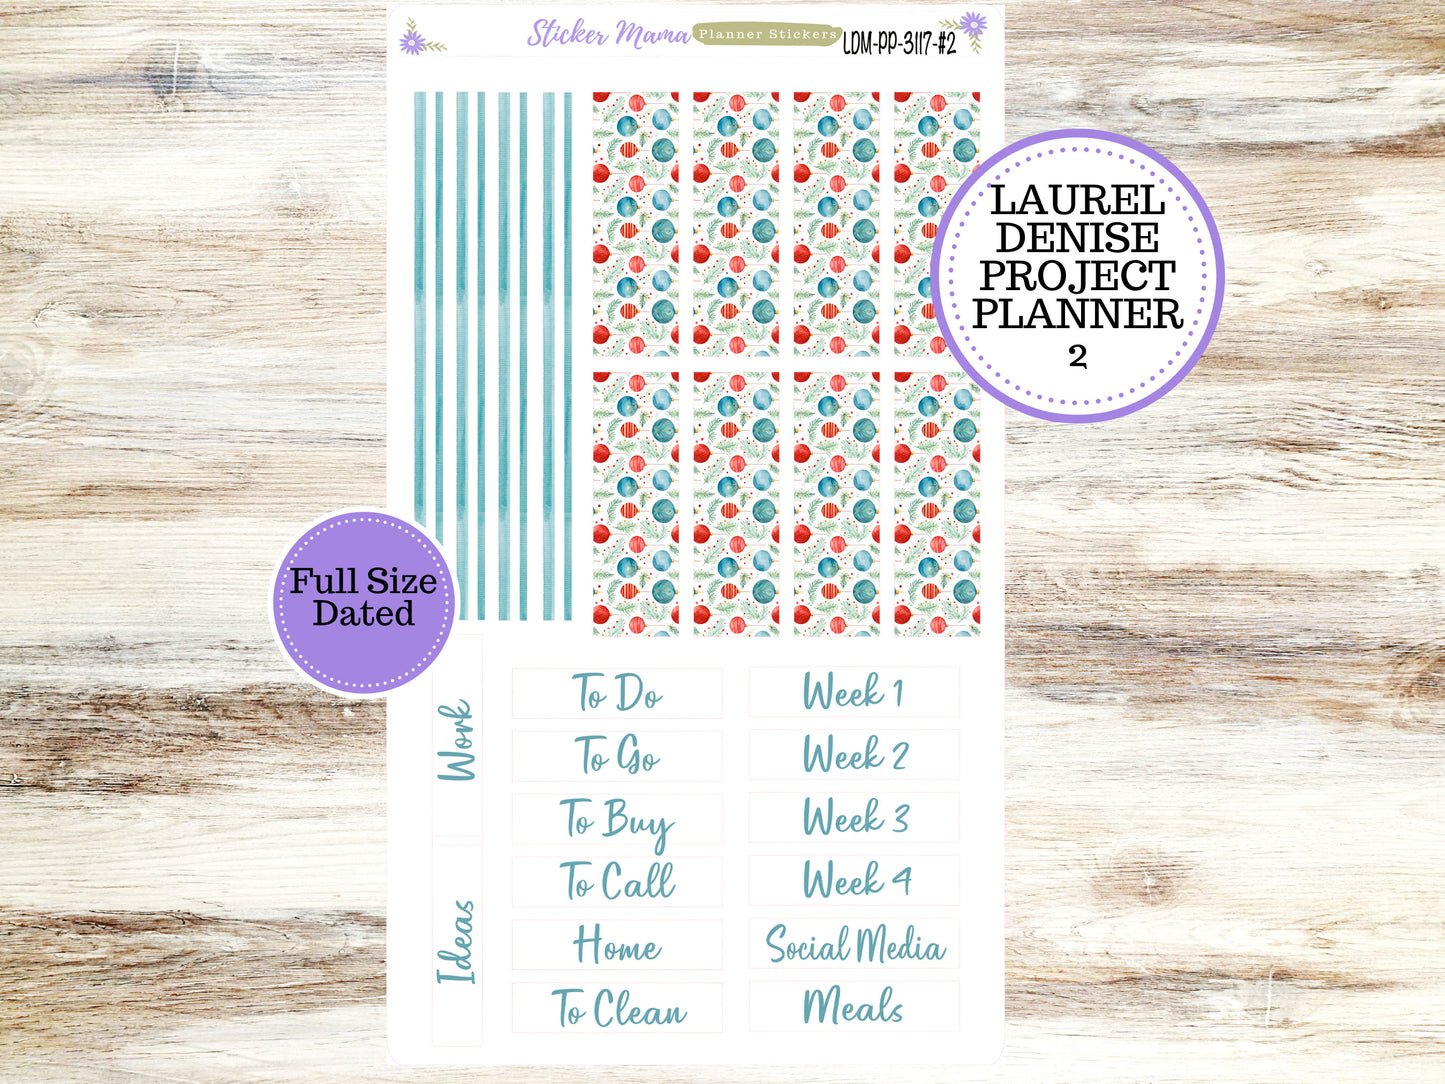 LAUREL DENISE PROJECT December Planner Kit #3117 || Merry Ornaments || Laurel Denise Kit || Laurel Denise Stickers ||  || December ld